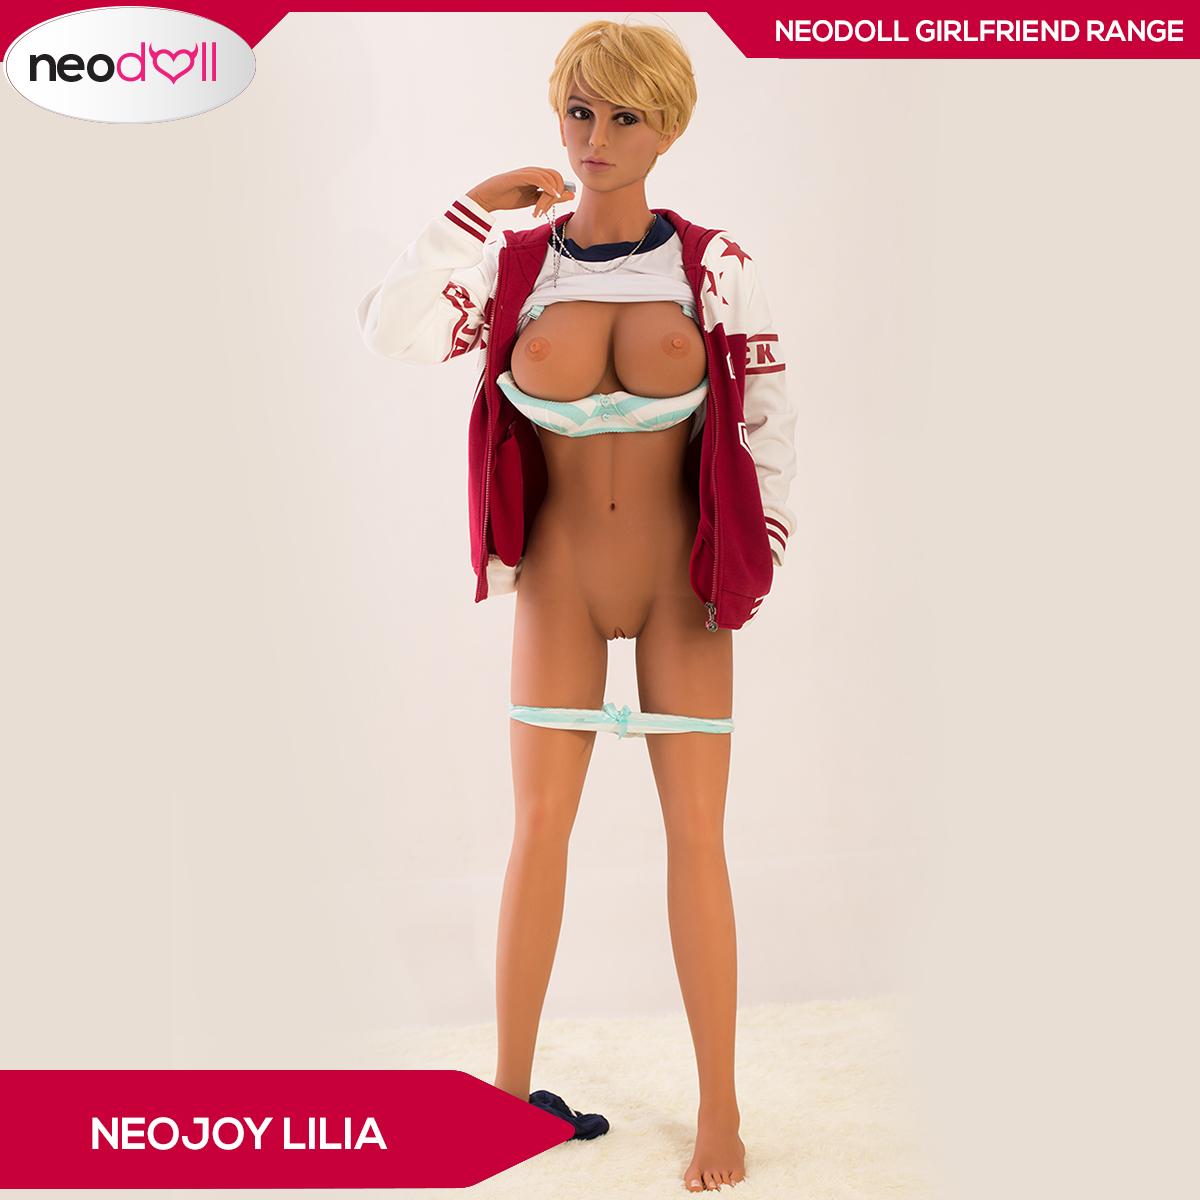 Neojoy - Lilia 158cm  - Girlfriend Range - Realistic Doll - Tan